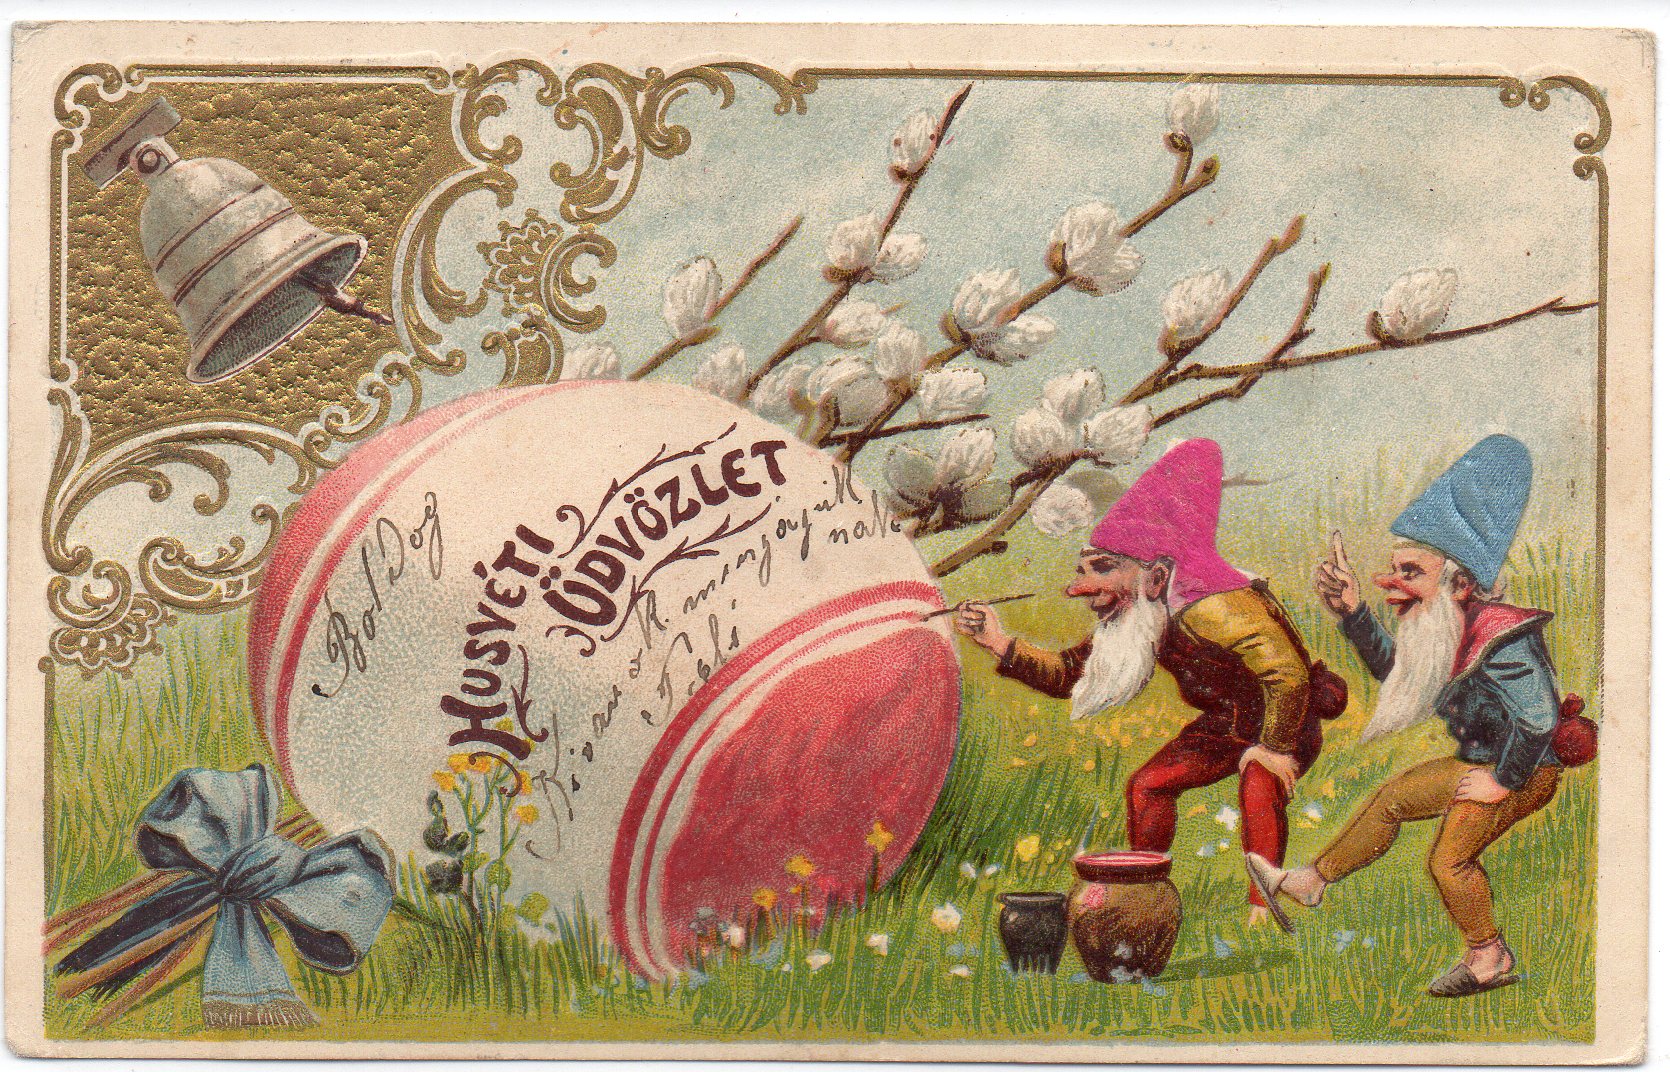 Public domain Easter gnome illustration